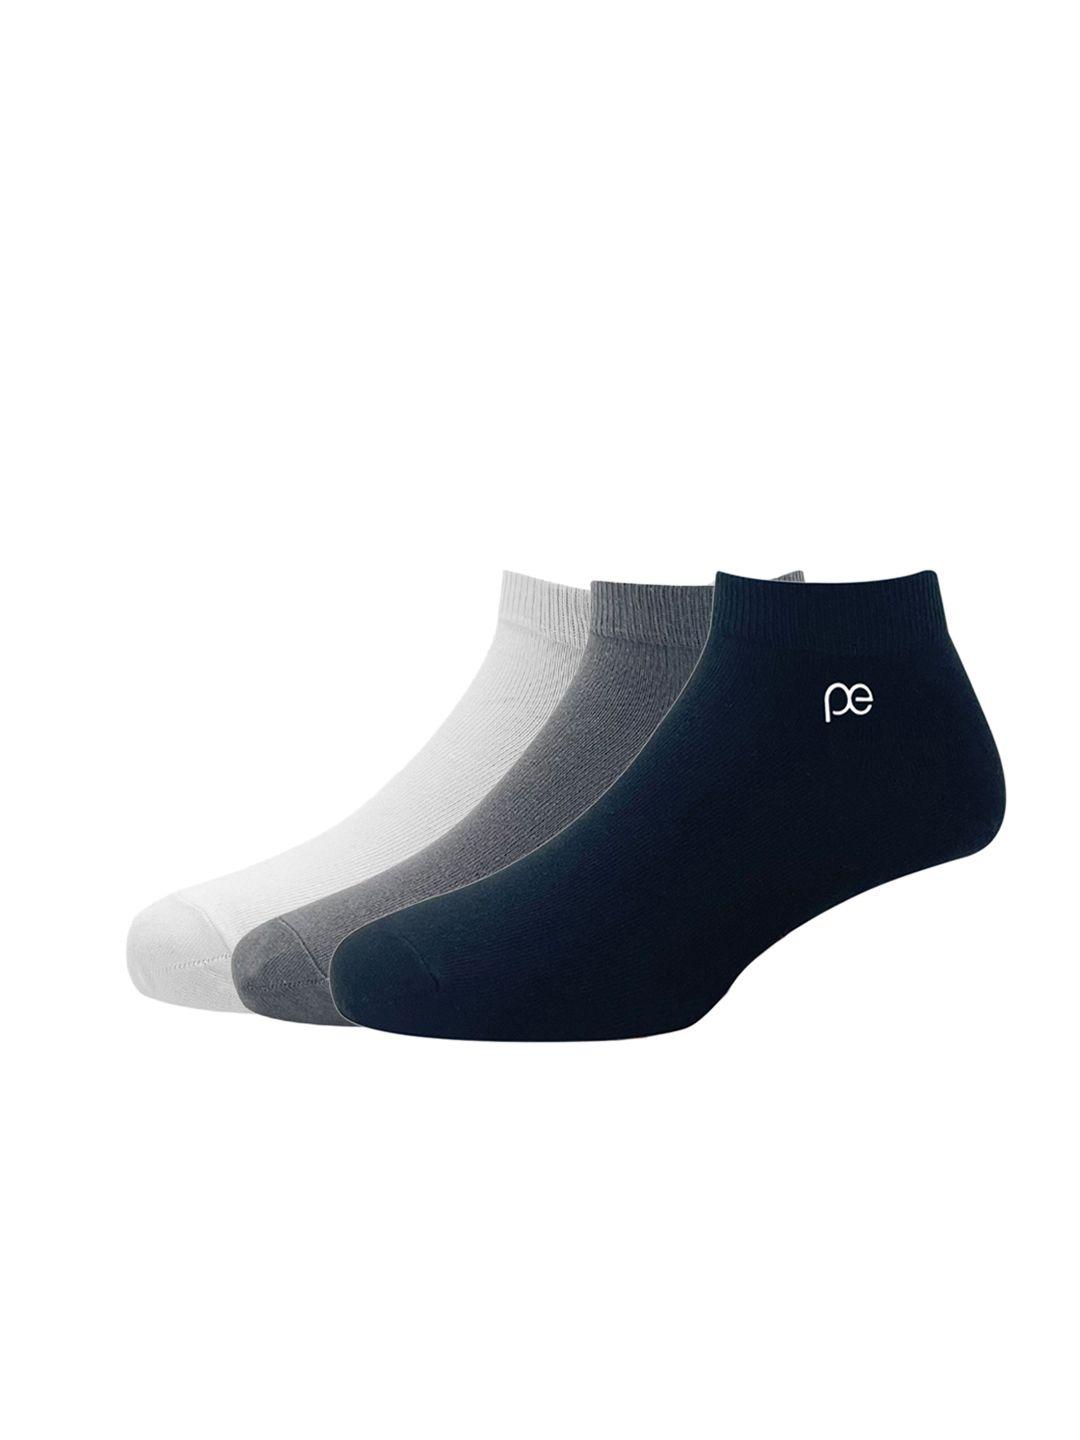 peter england men white & grey pack of 3 cotton ankle length socks